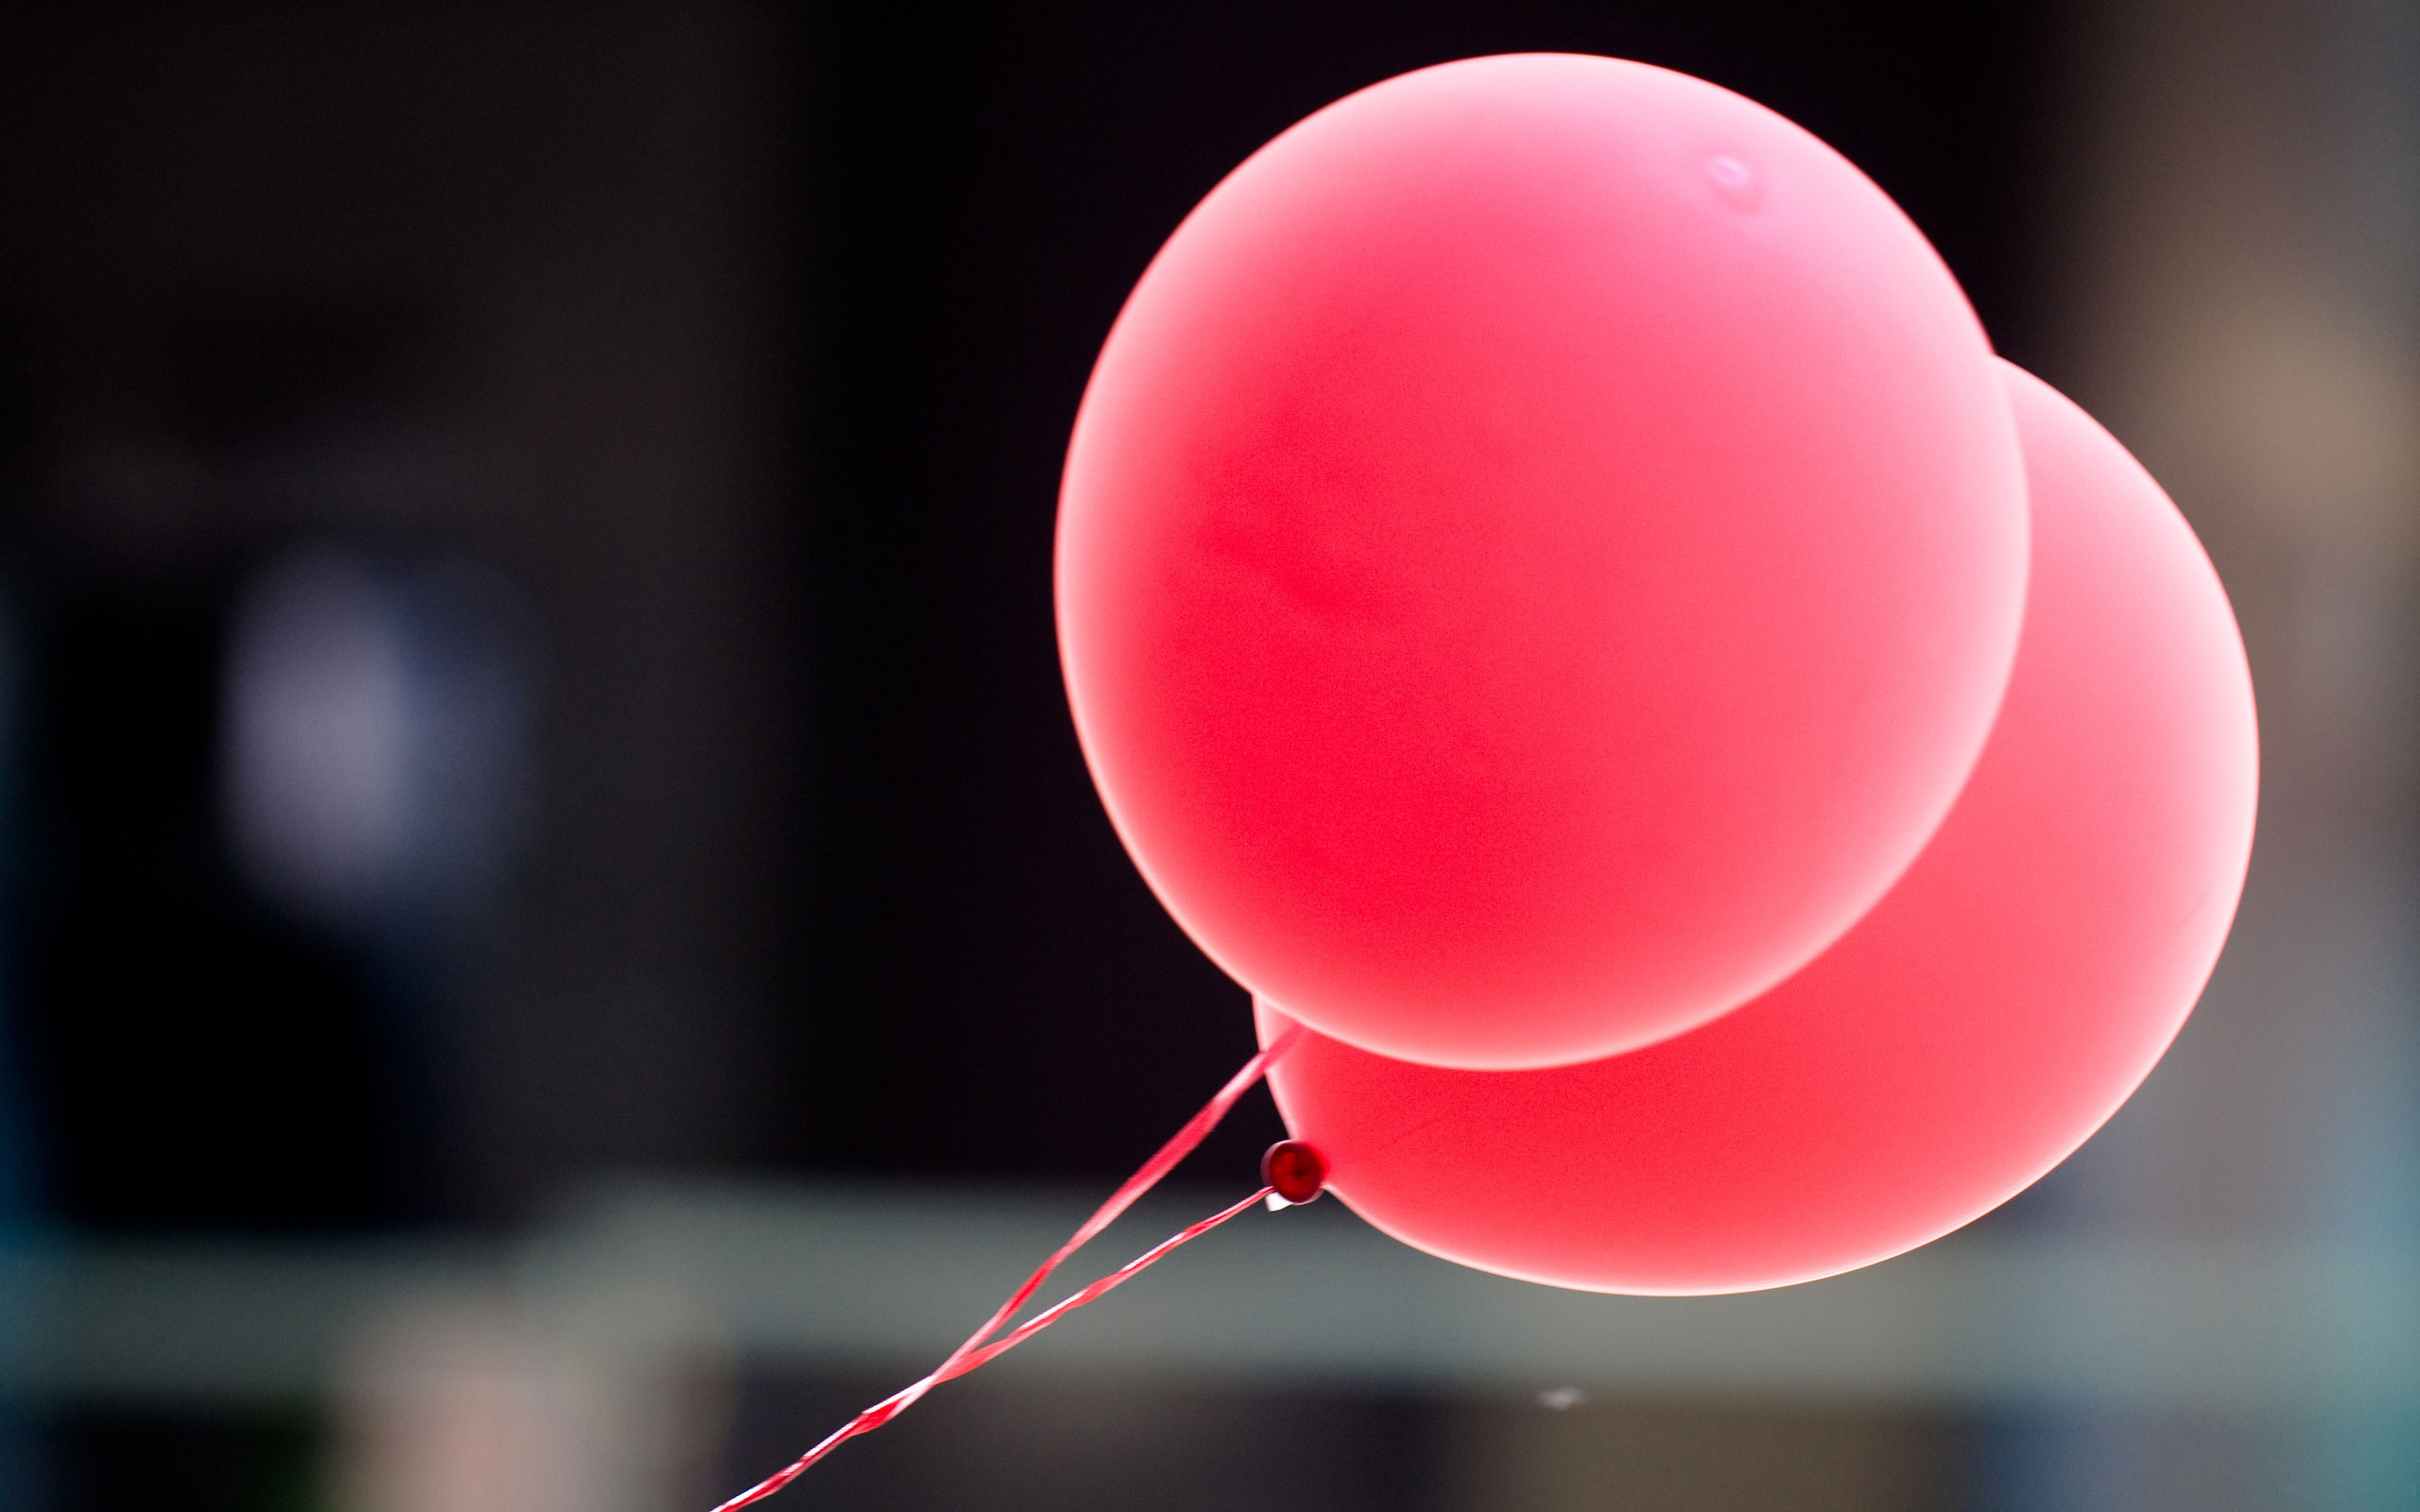 balloon, photography Image for desktop